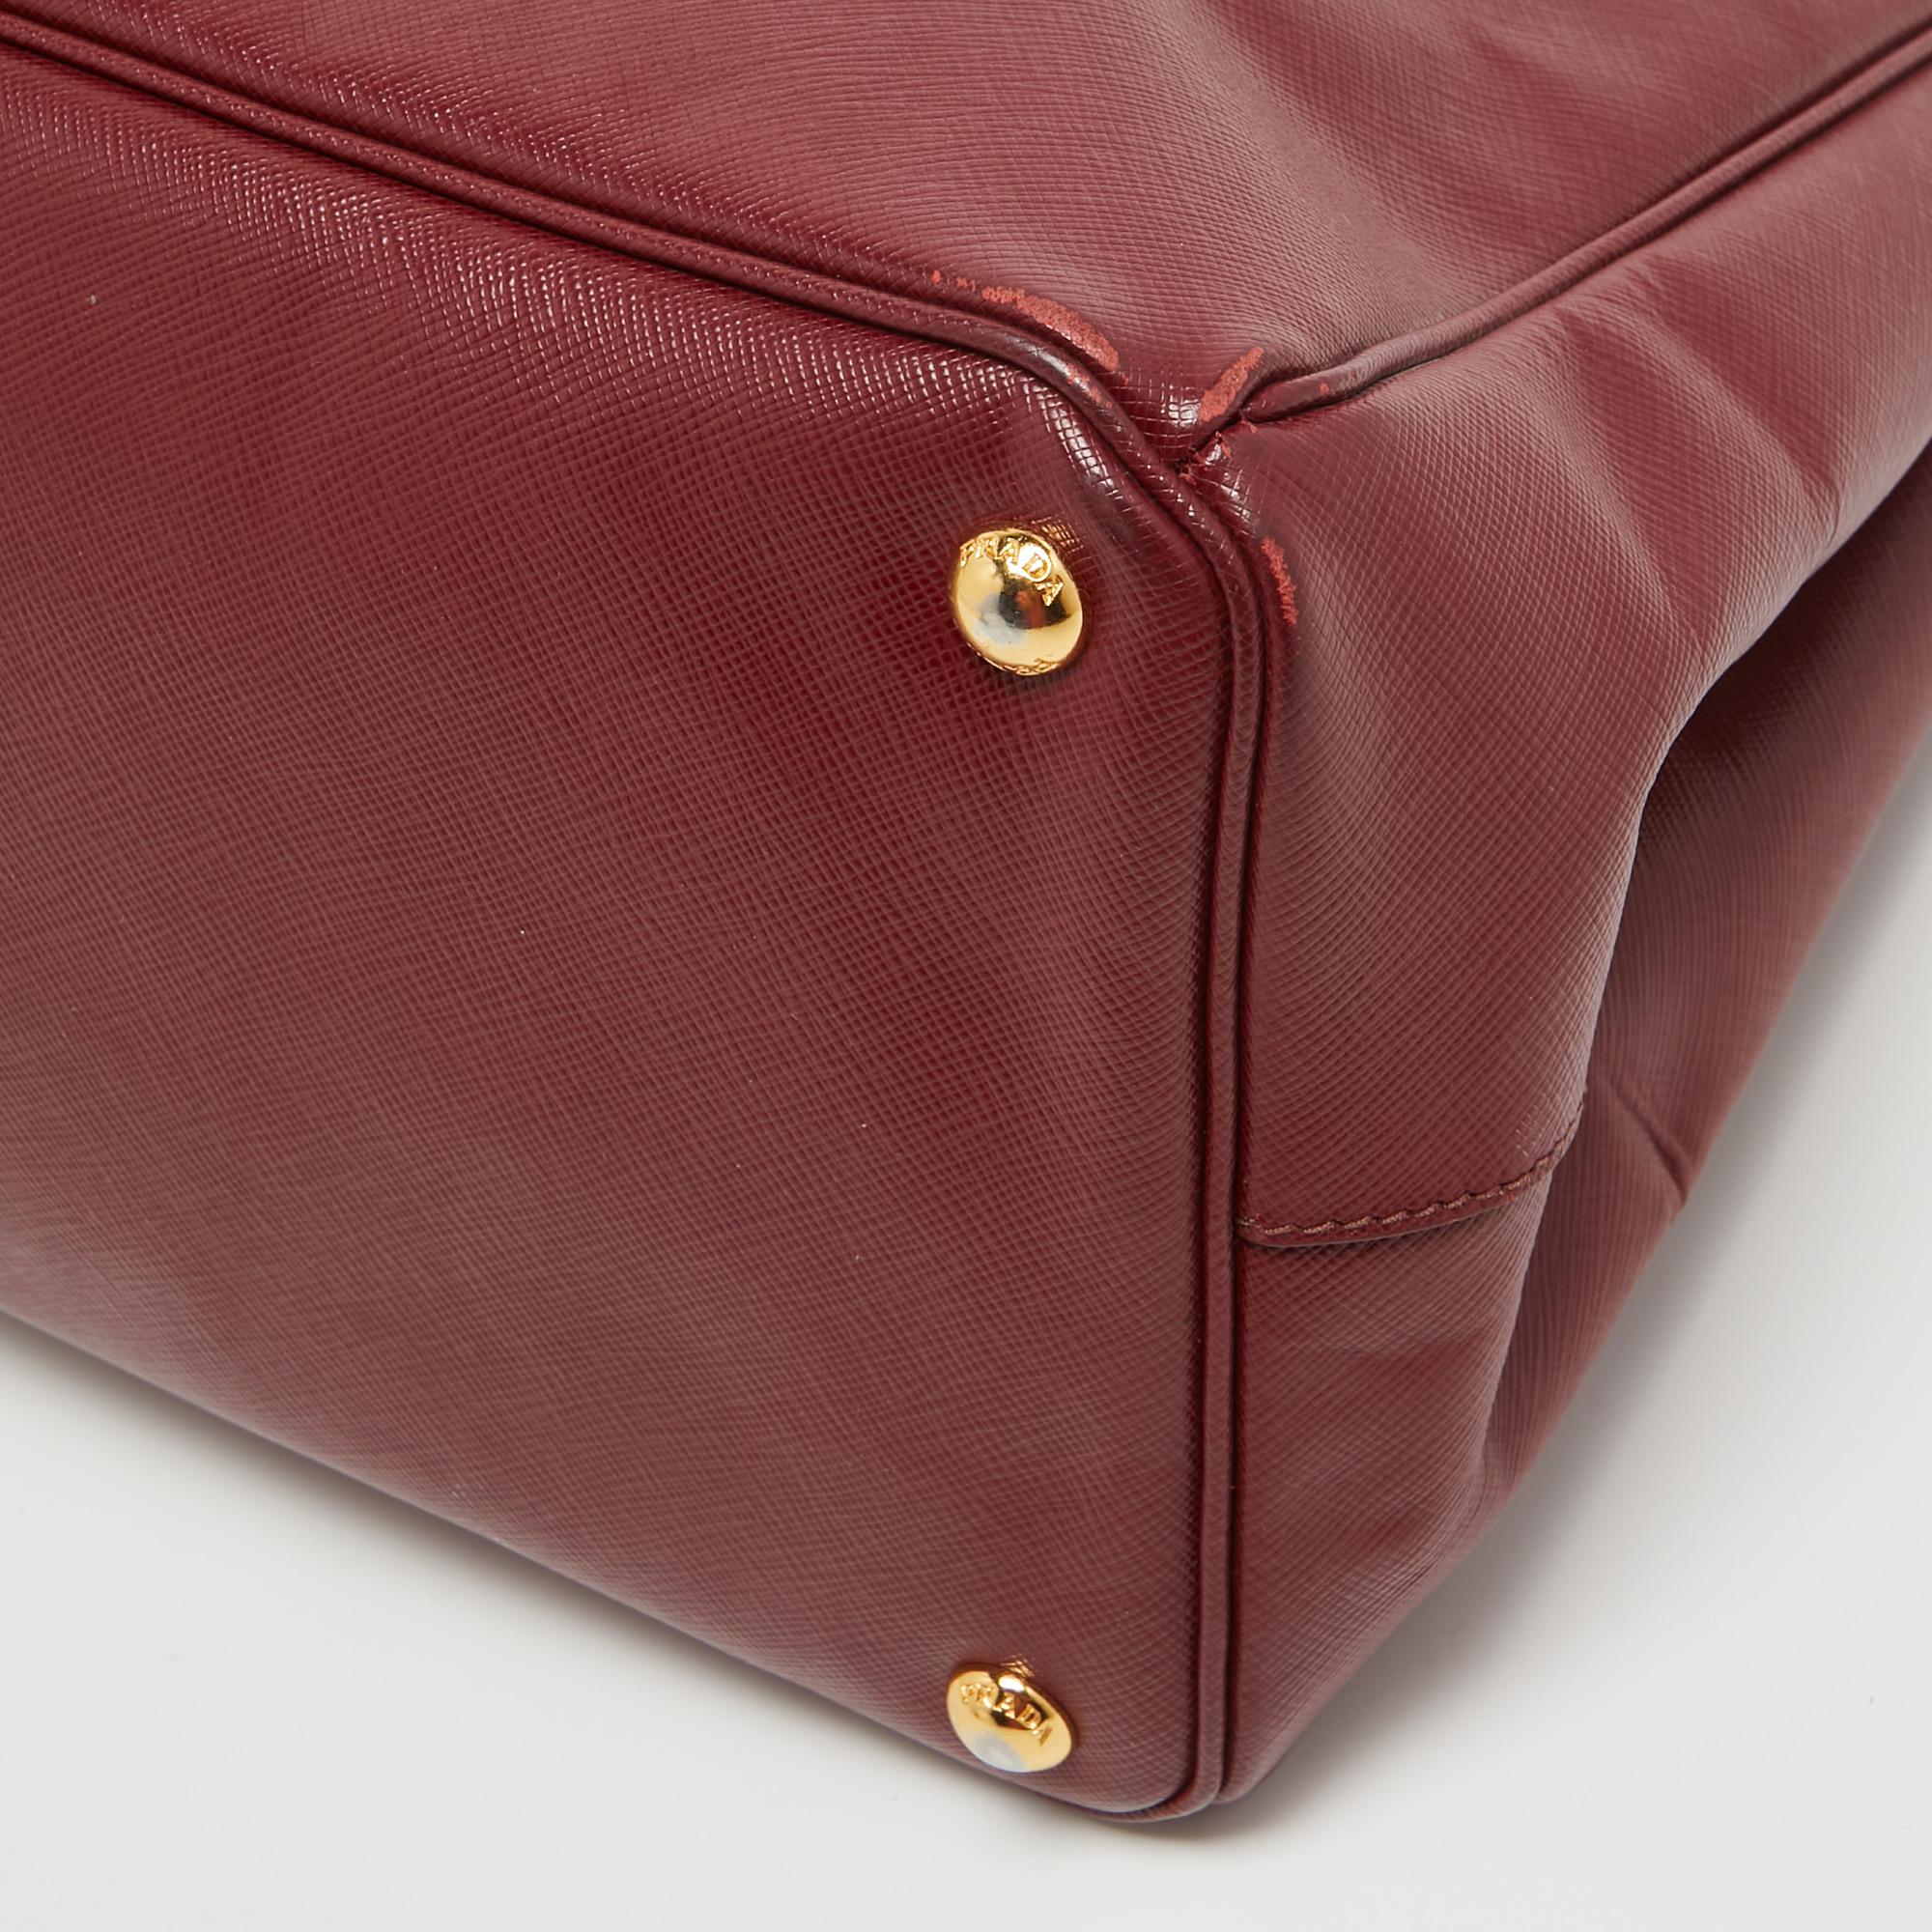 Prada Red Saffiano Leather Large Galleria Tote For Sale 6